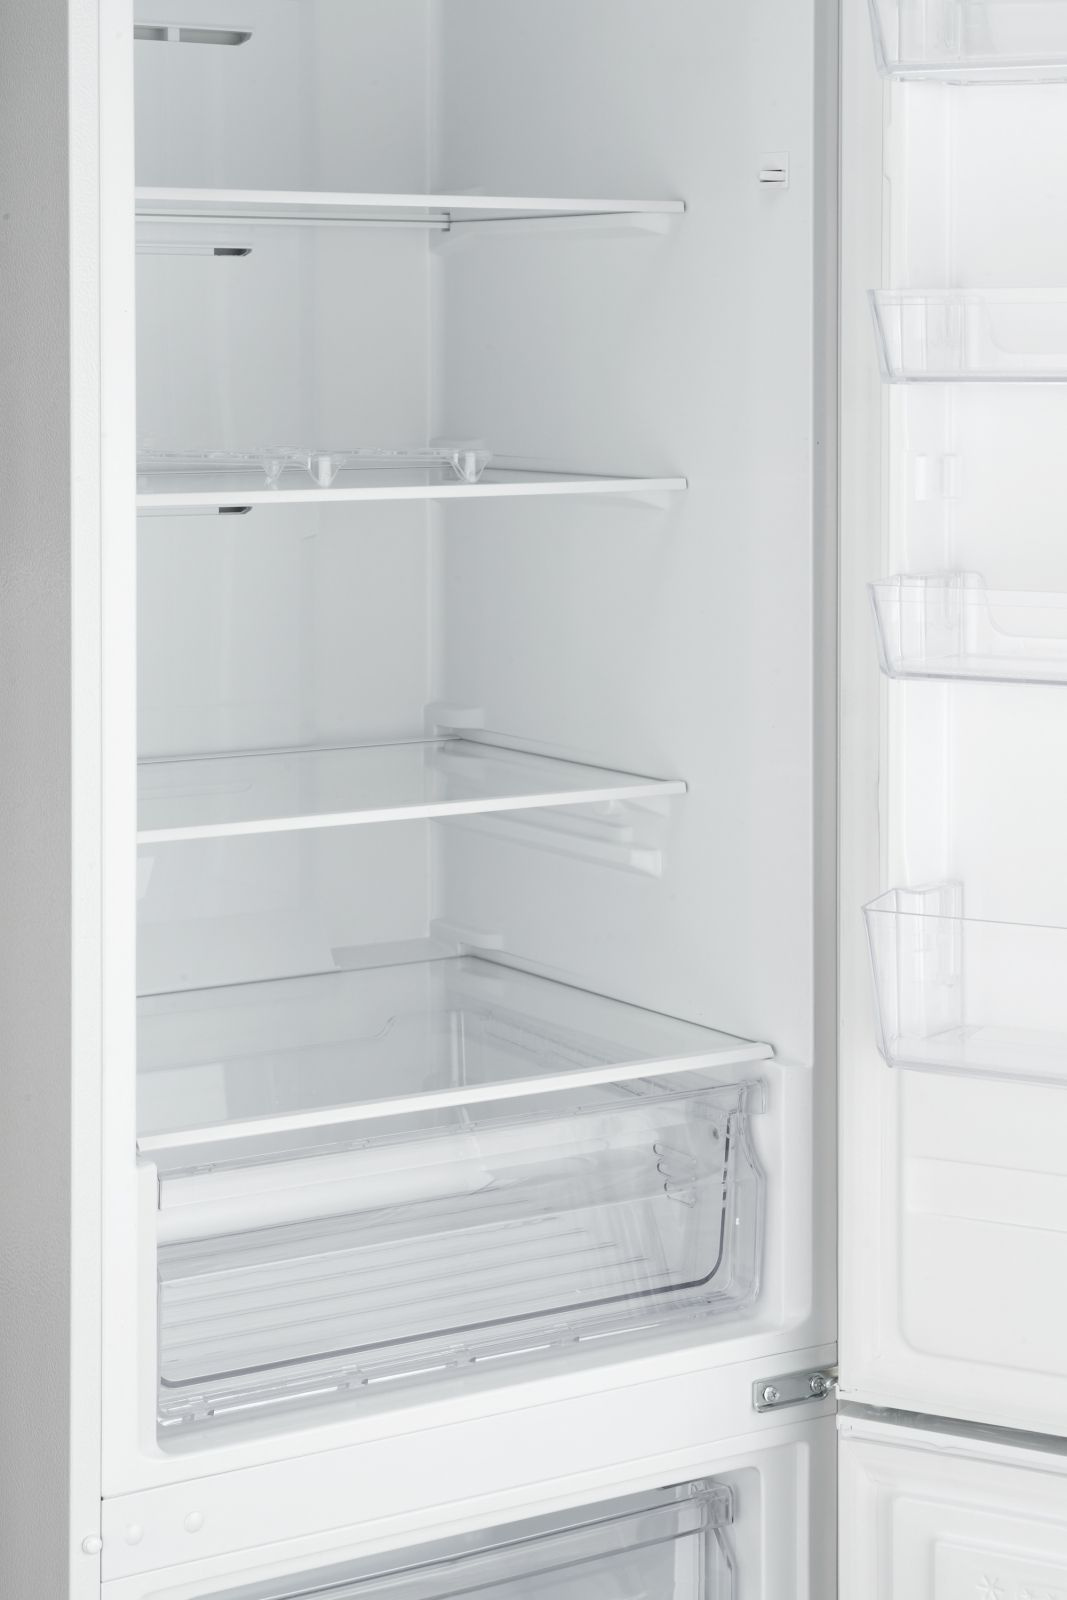 Холодильник Weissgauff WRK 190 W Full NoFrost 2-хкамерн. белый